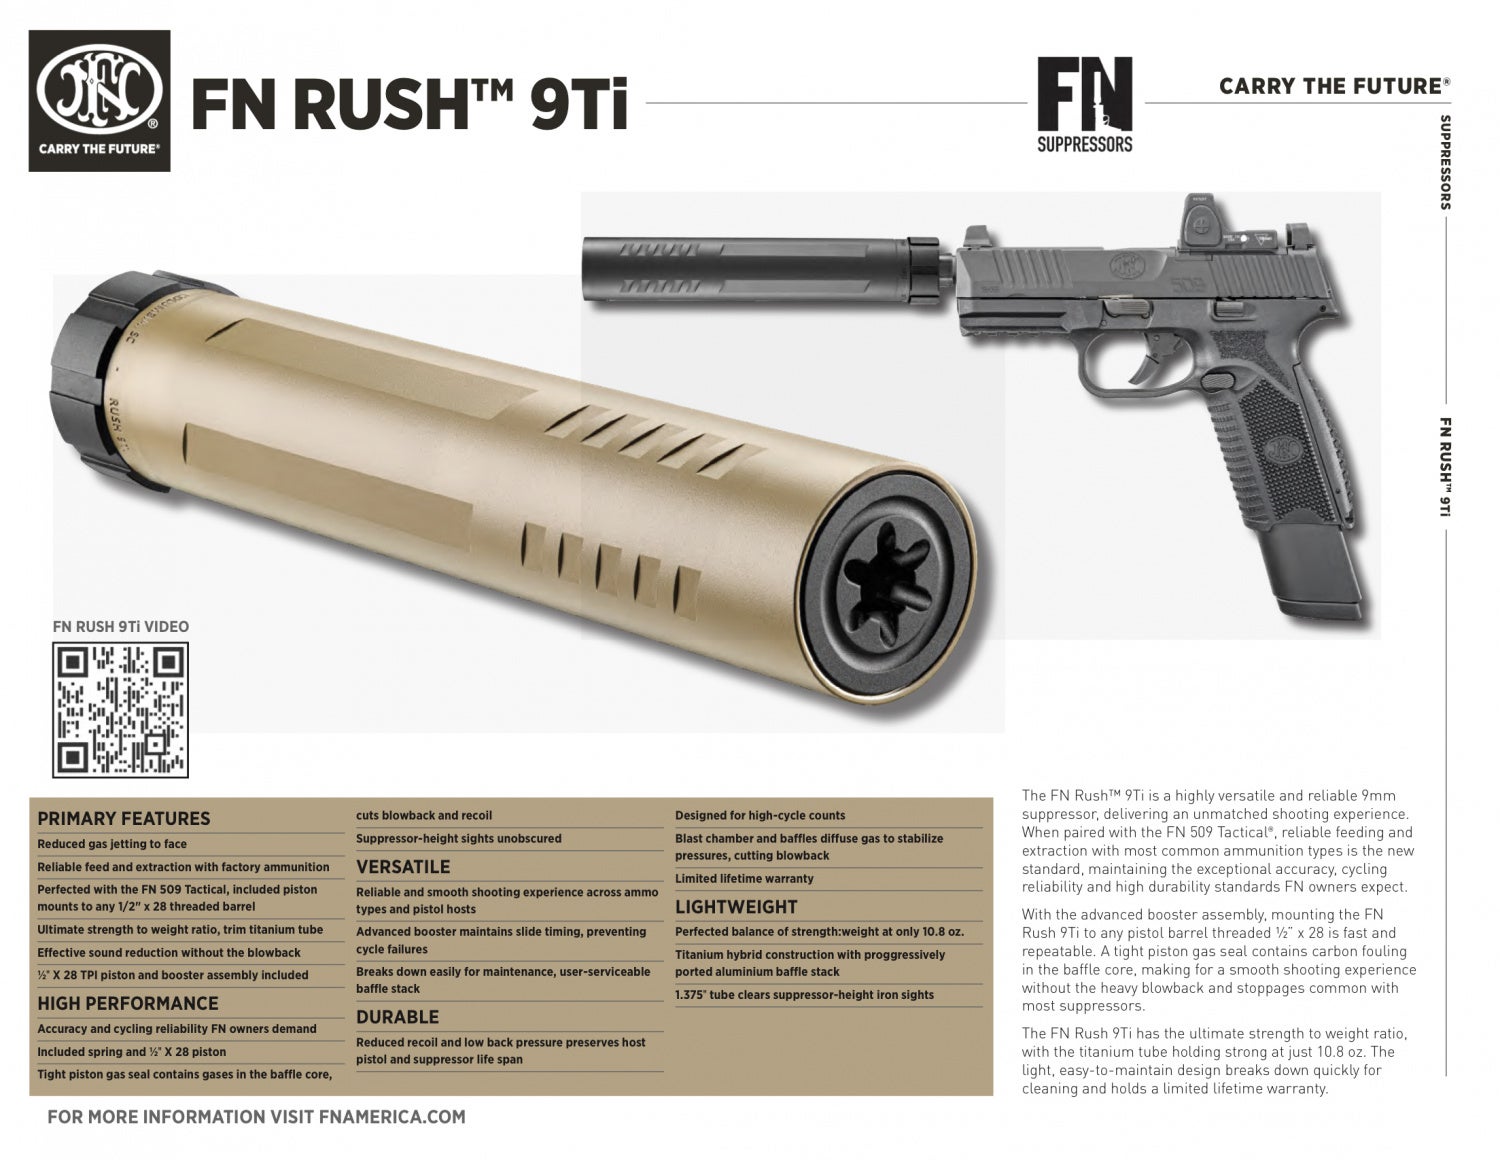 Just Annouced: FN RUSH 9Ti 9MM Pistol Suppressor - FN America